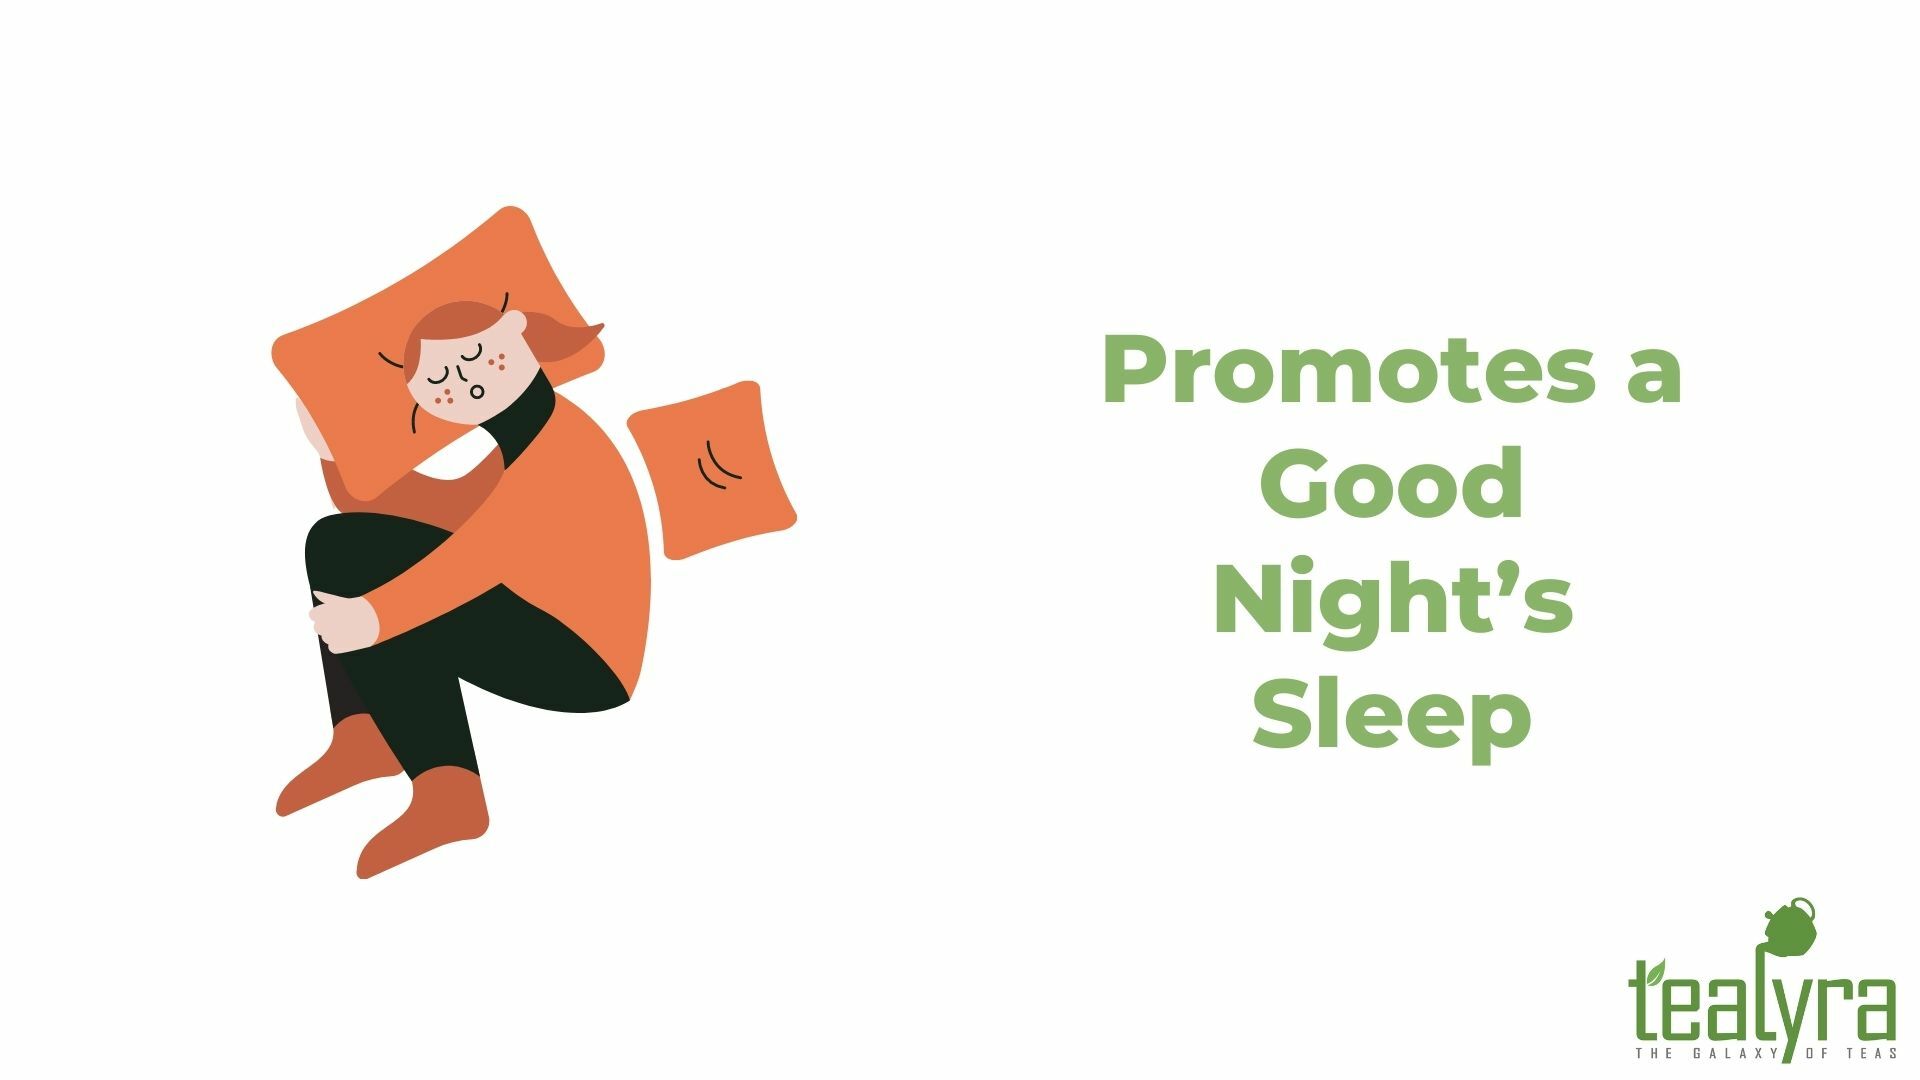 image-Promotes-a-Good-Night-Sleep